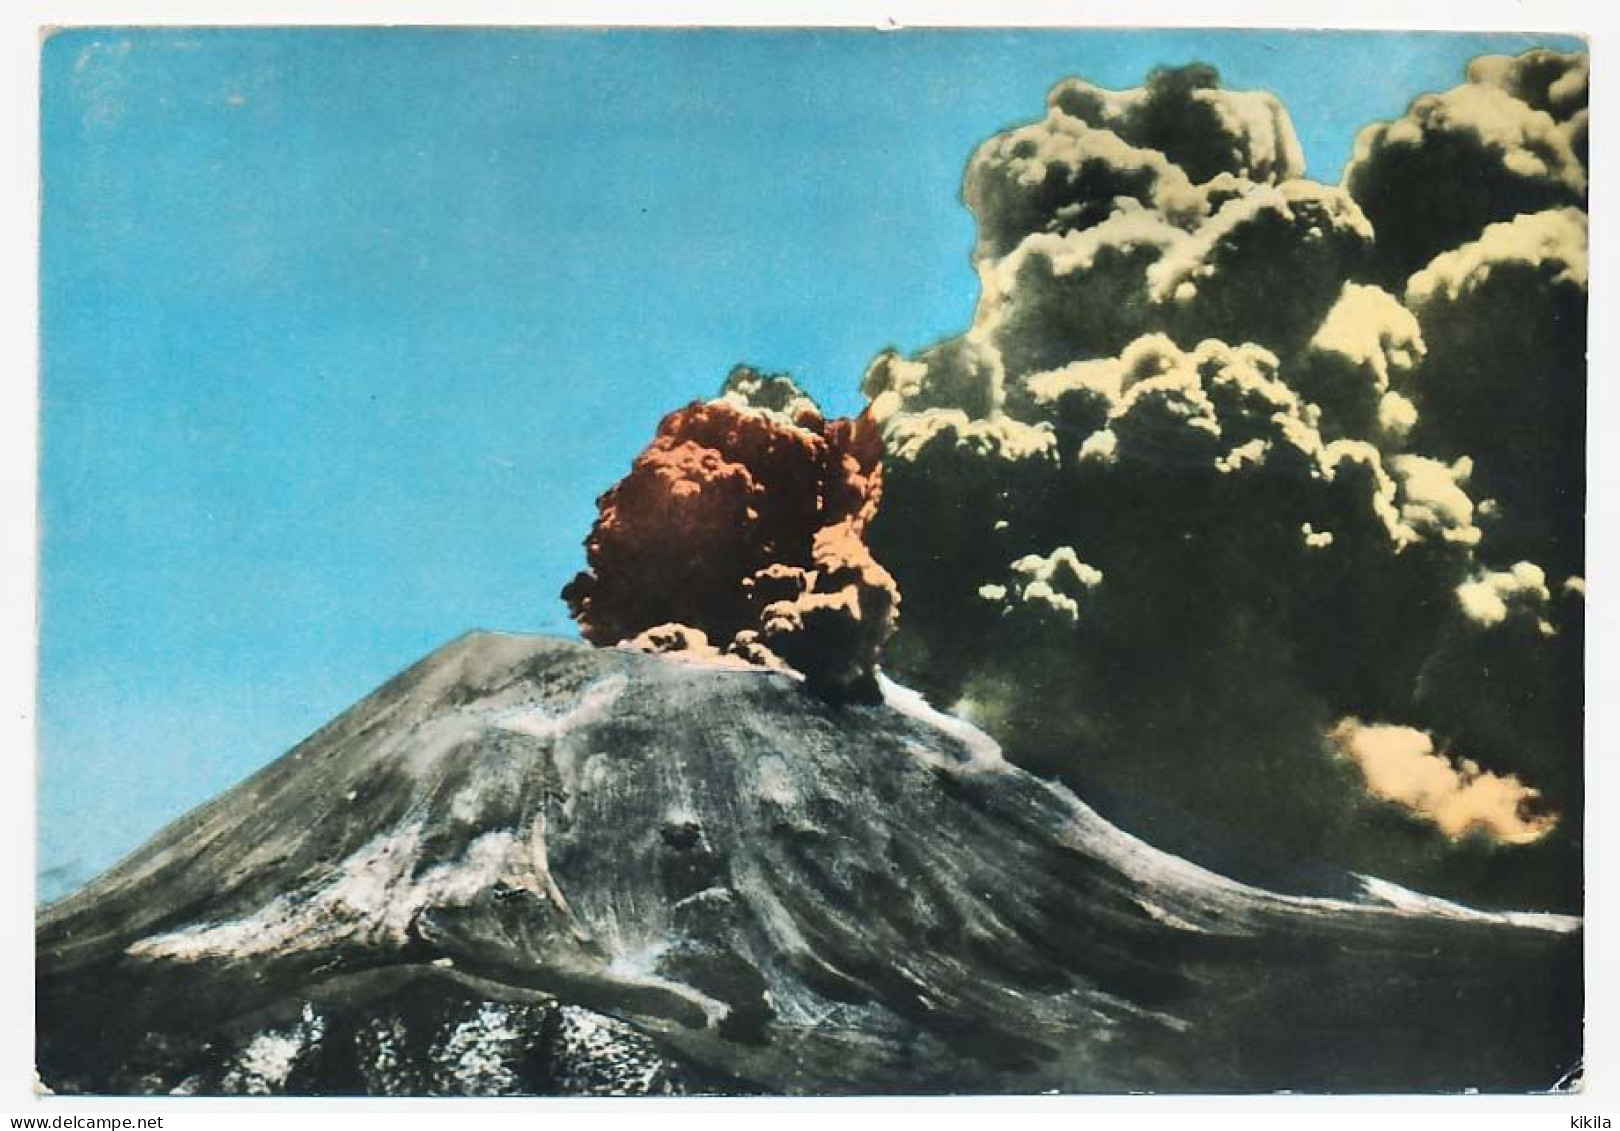 CPSM 10.5 X 15 Italie (26) NAPOLI Naples Vesuvio Eruzione 1944 Volcan Vésuve éruption De 1944 - Napoli (Neapel)